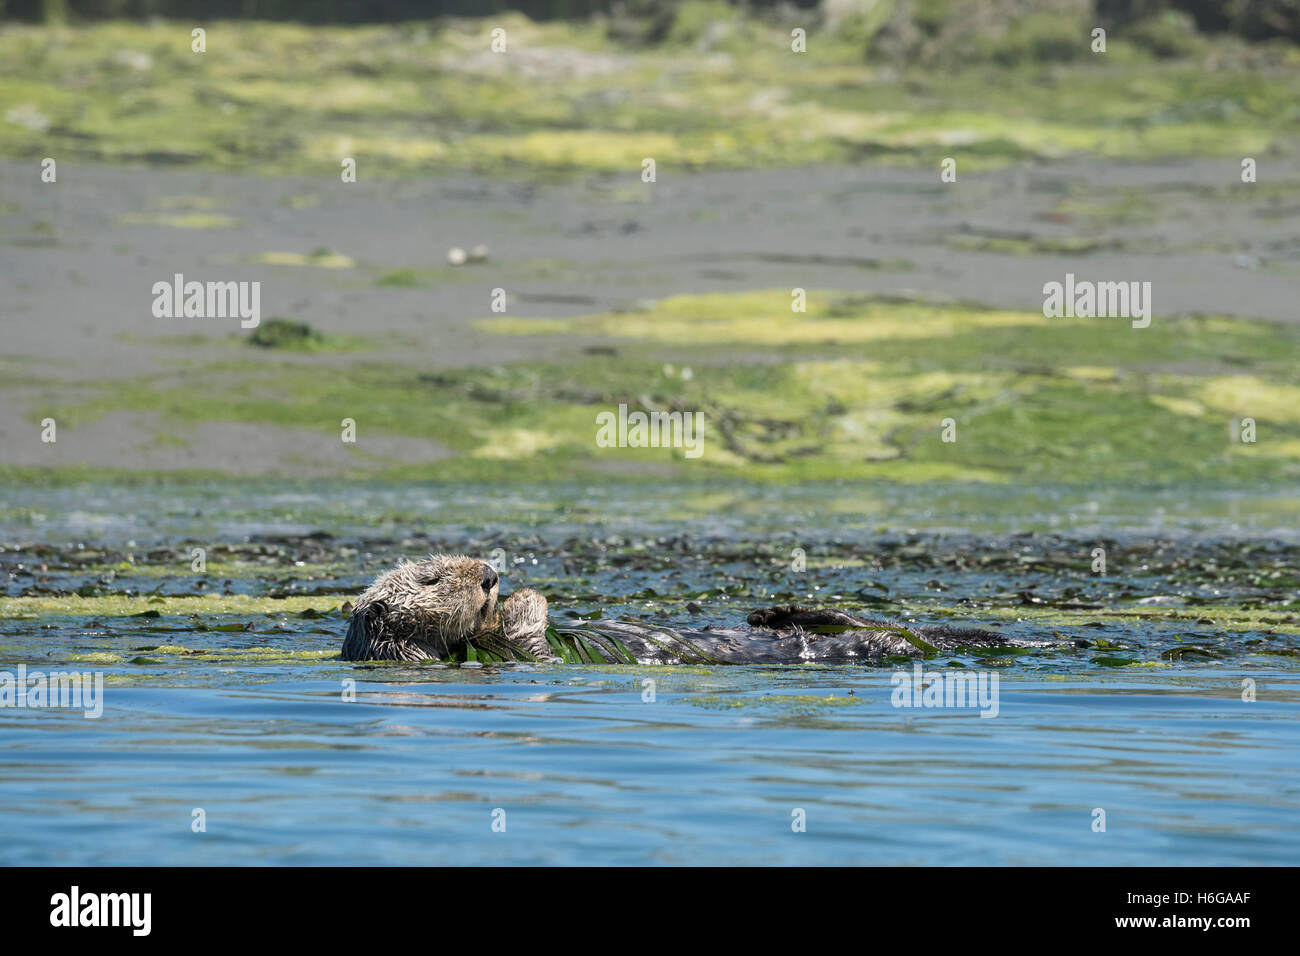 California sea otter, Enhydra lutris nereis, resting while wrapped in eel grass or eelgrass, Elkhorn Slough, California, USA Stock Photo